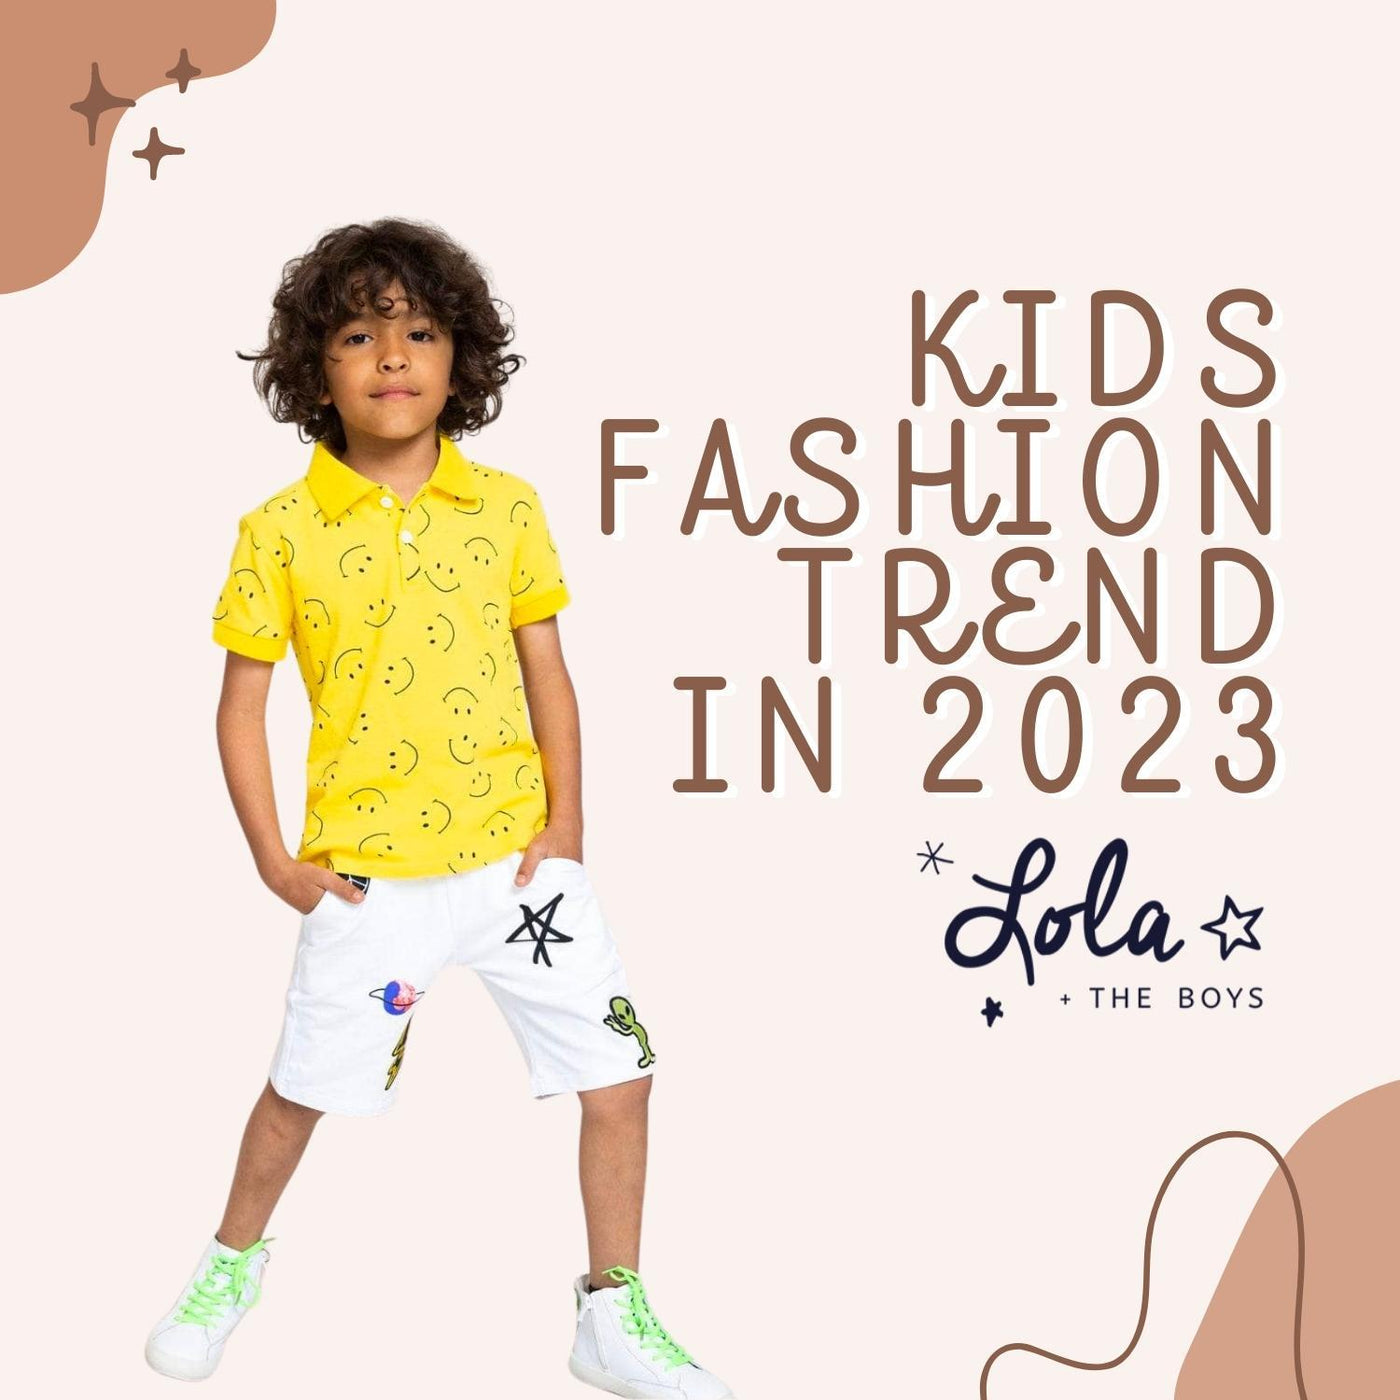 Kids Fashion News